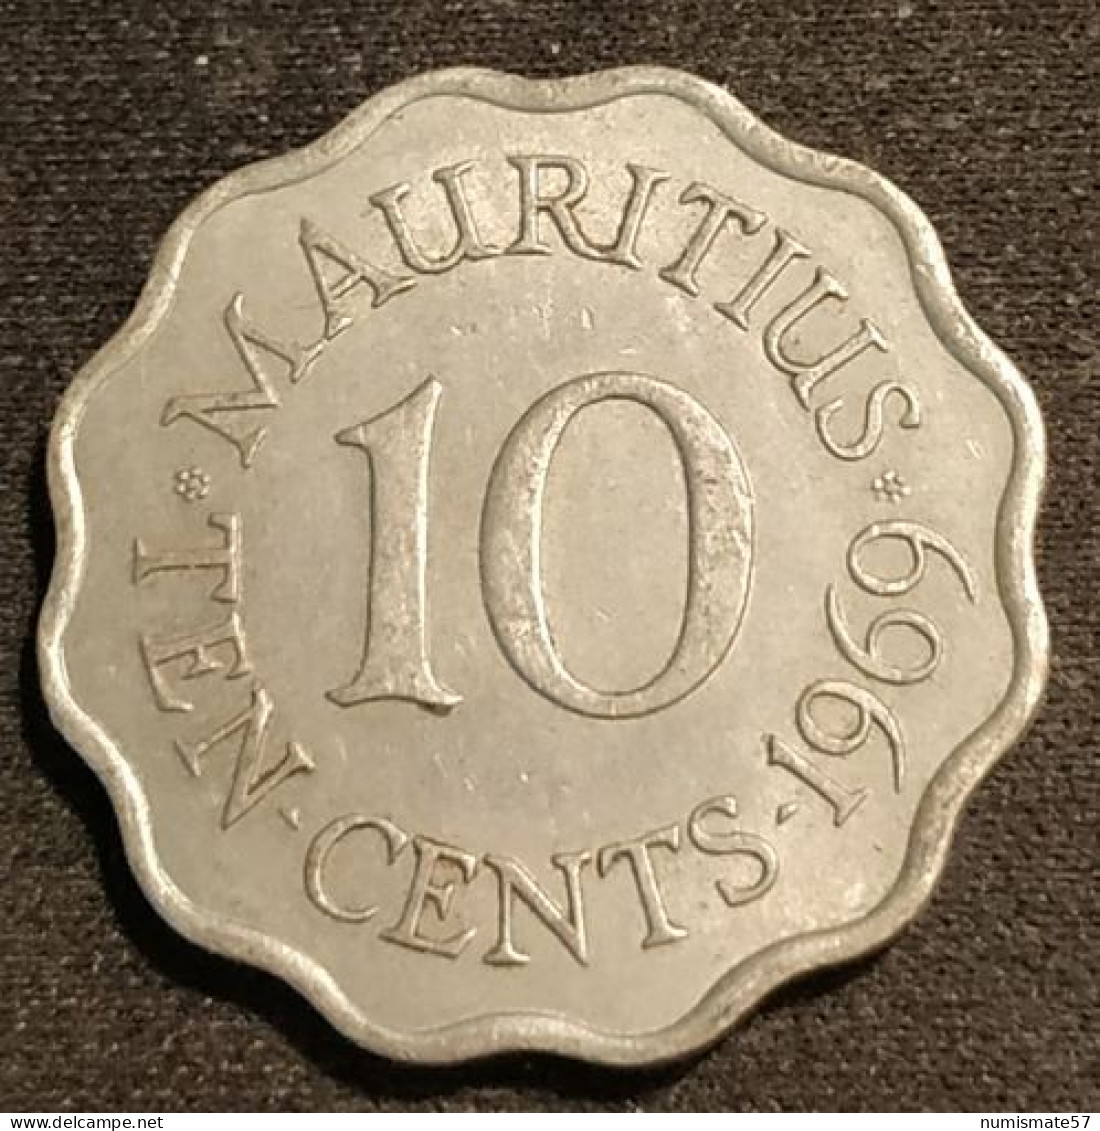 Pas Courant - ILE MAURICE - MAURITIUS - 10 CENTS 1969 - Elizabeth II - KM 33 - Mauritius